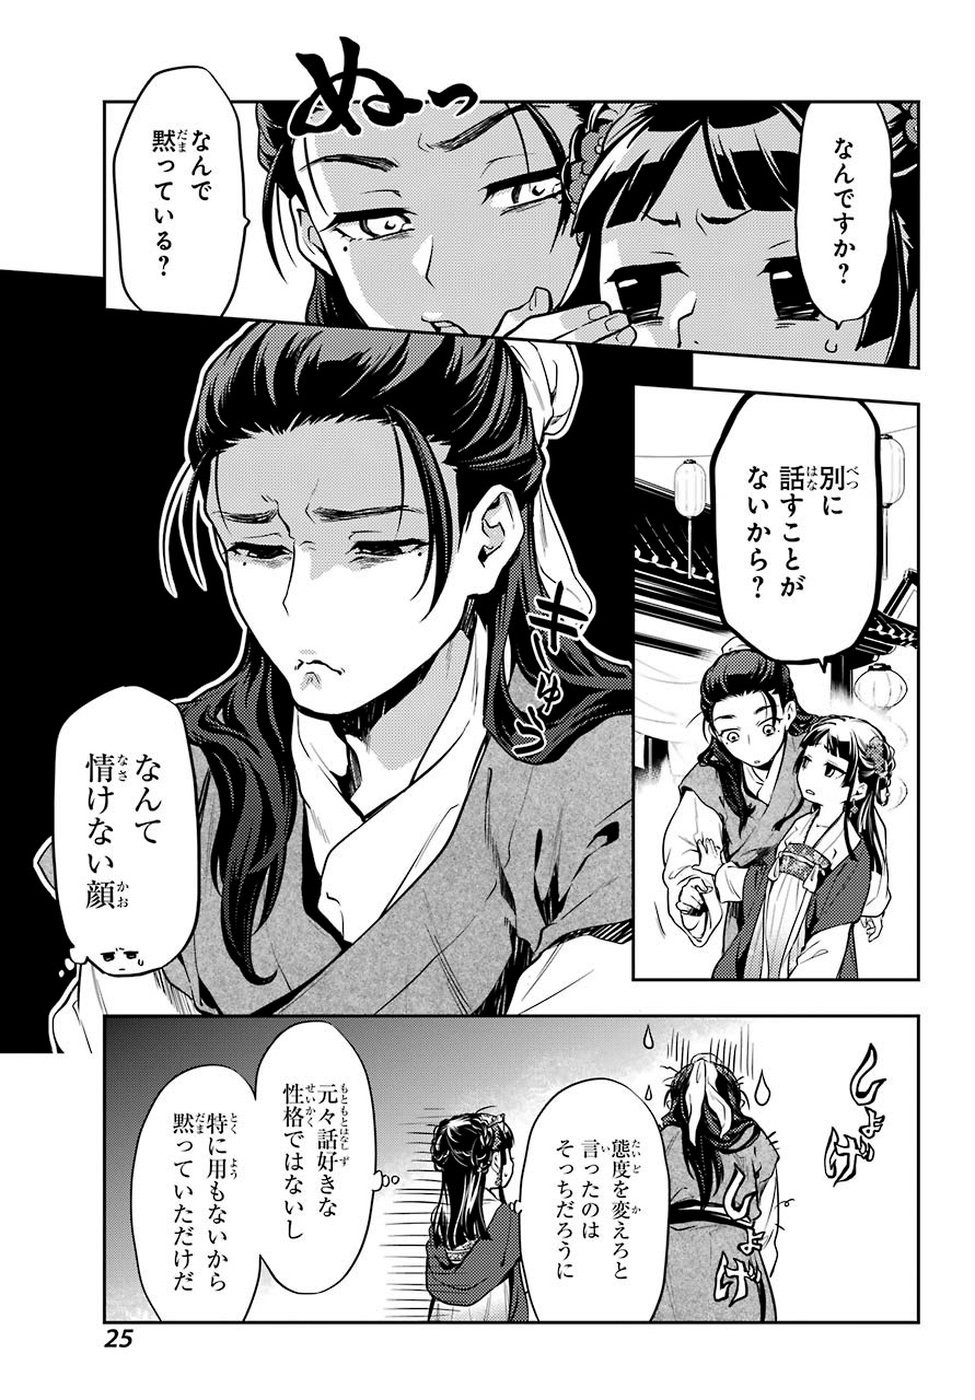 Kusuriya no Hitorigoto - Chapter 28 - Page 18